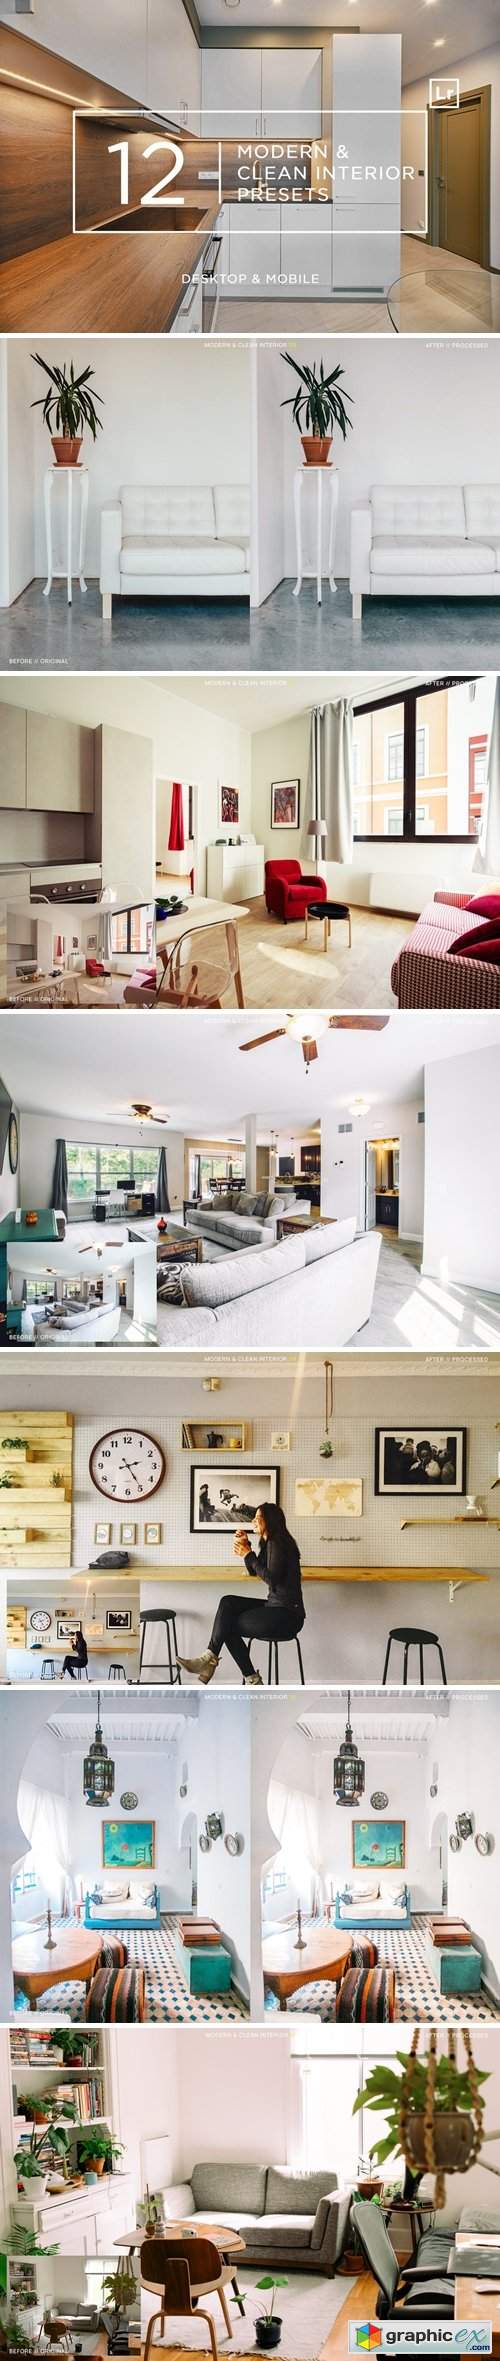 12 Modern & Clean Interior Presets + Mobile